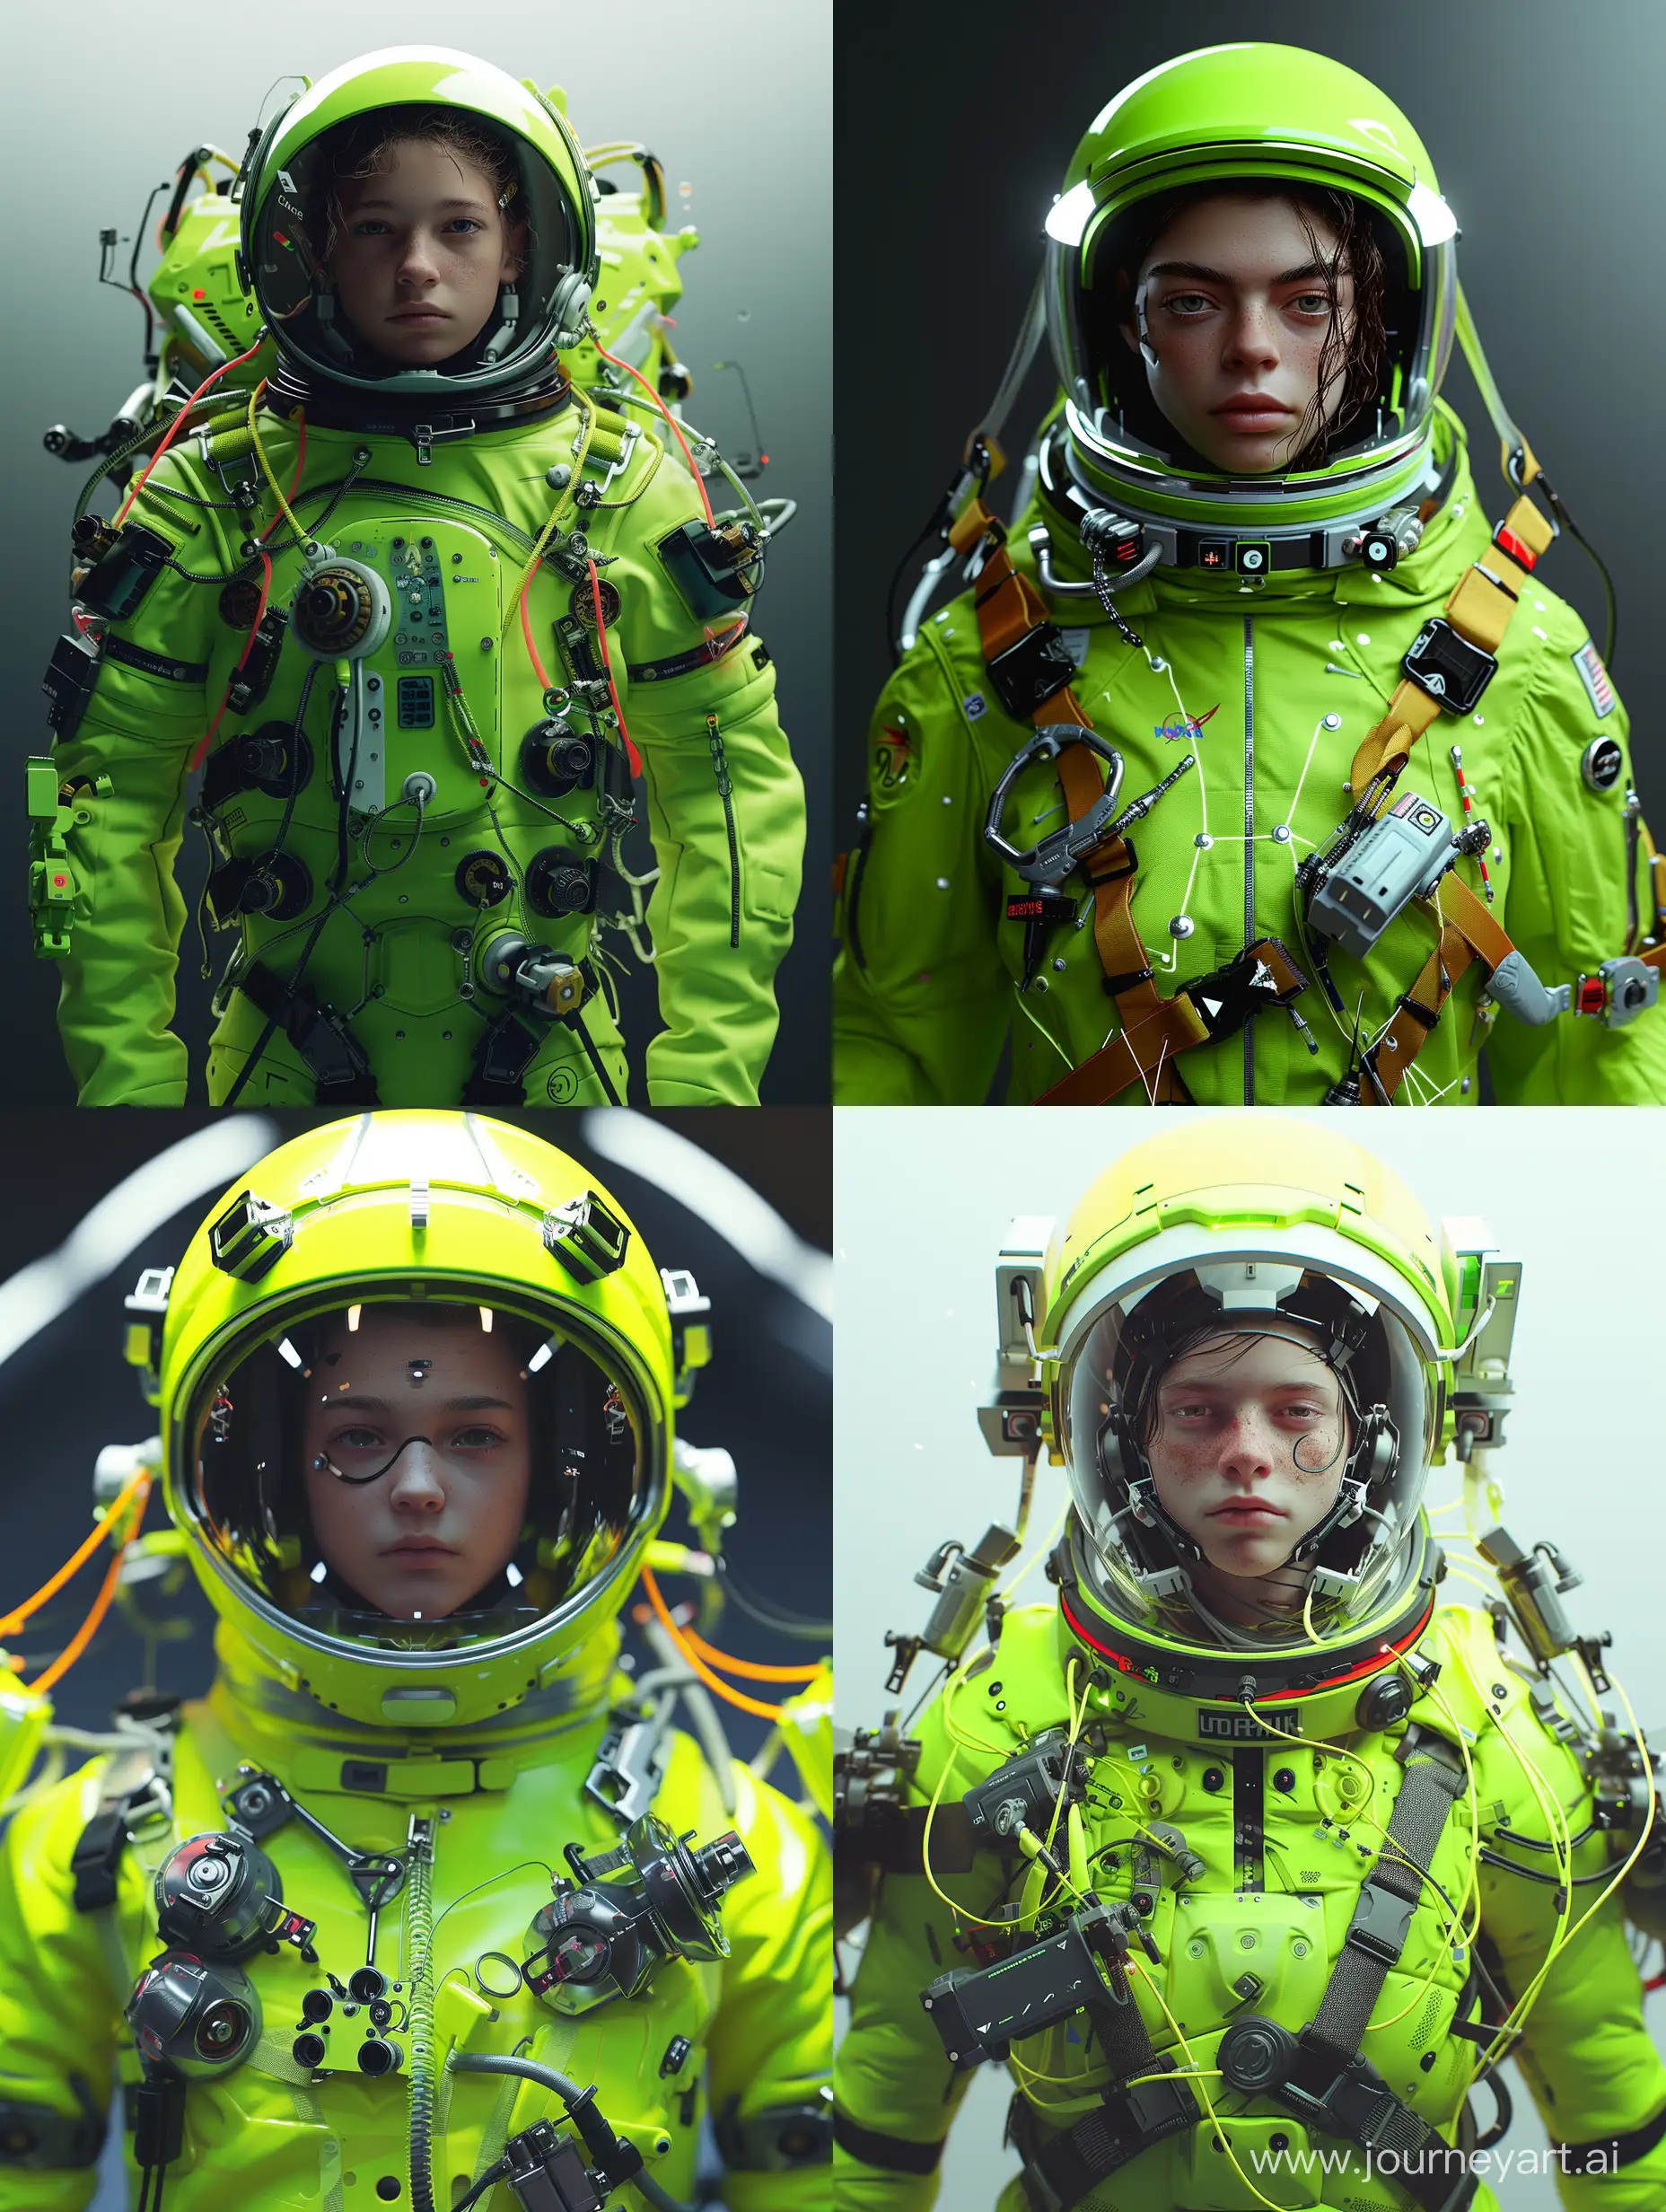 Futuristic-Astronaut-in-Vibrant-Neon-Green-Spacesuit-with-Advanced-Gear